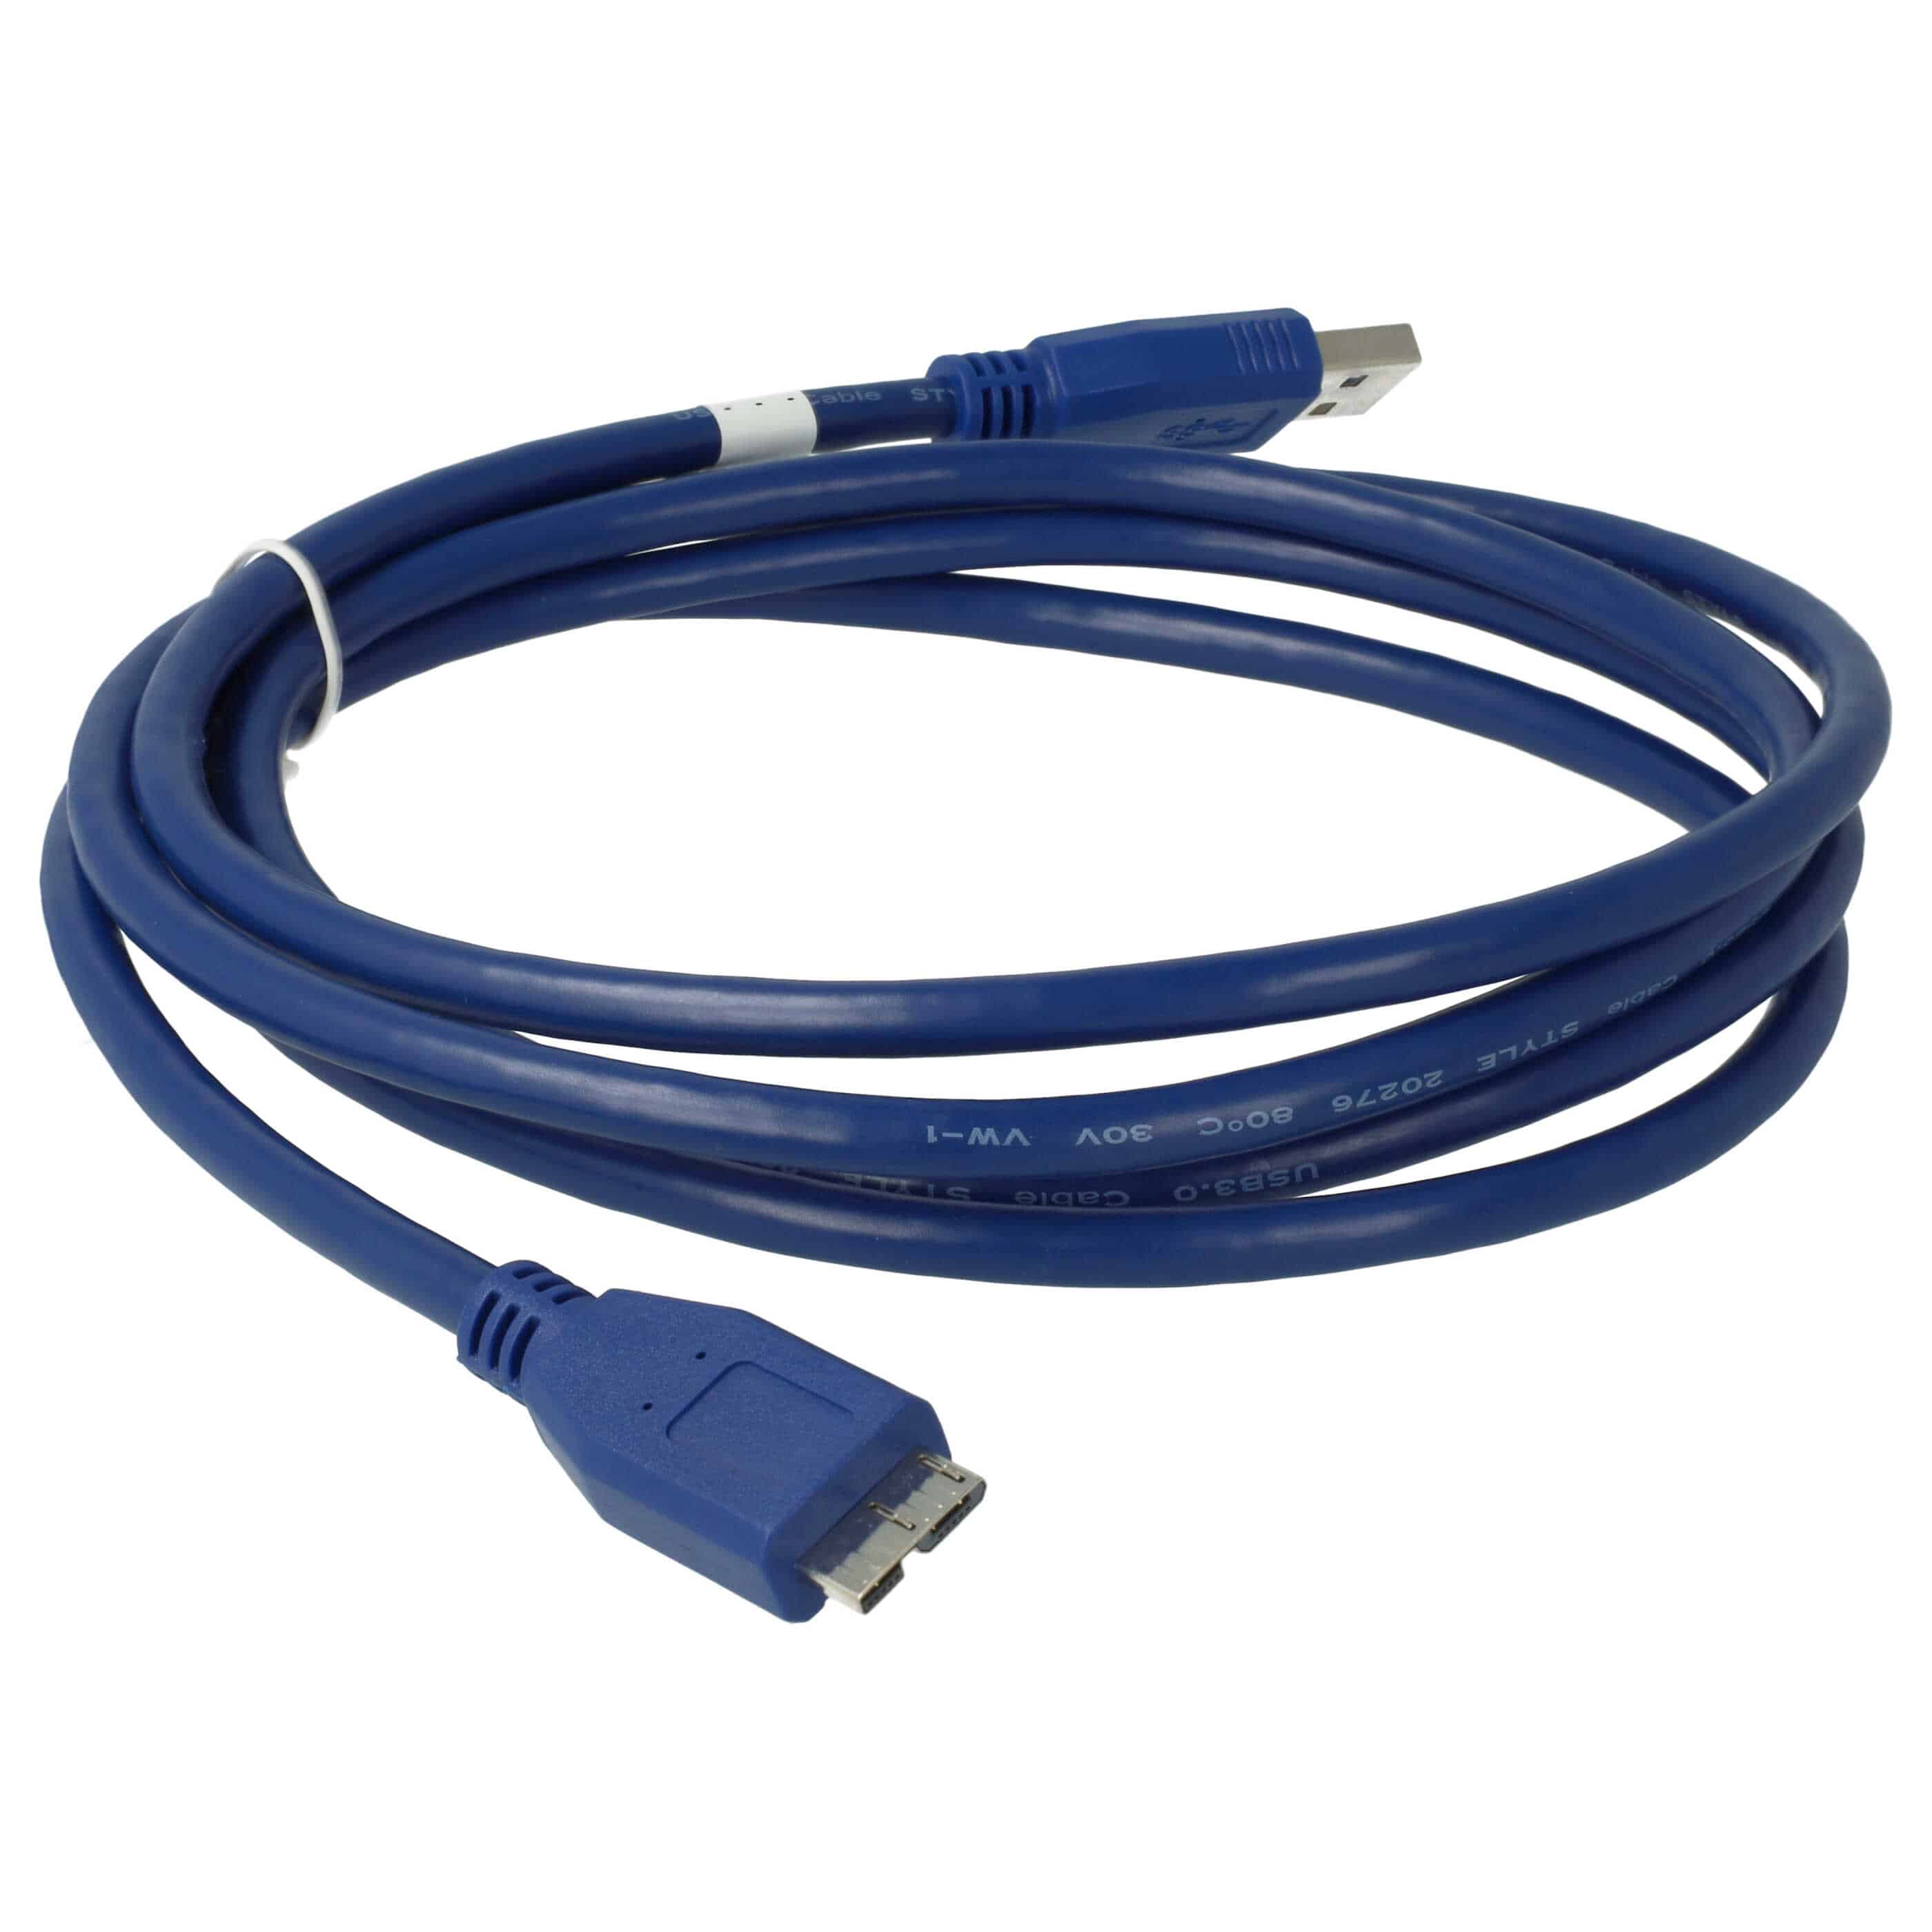 Micro-USB Cable (Standard USB Type A to Micro USB 3.0) suitable for Buffalo HD-AVSU3 Media Hard Drive 